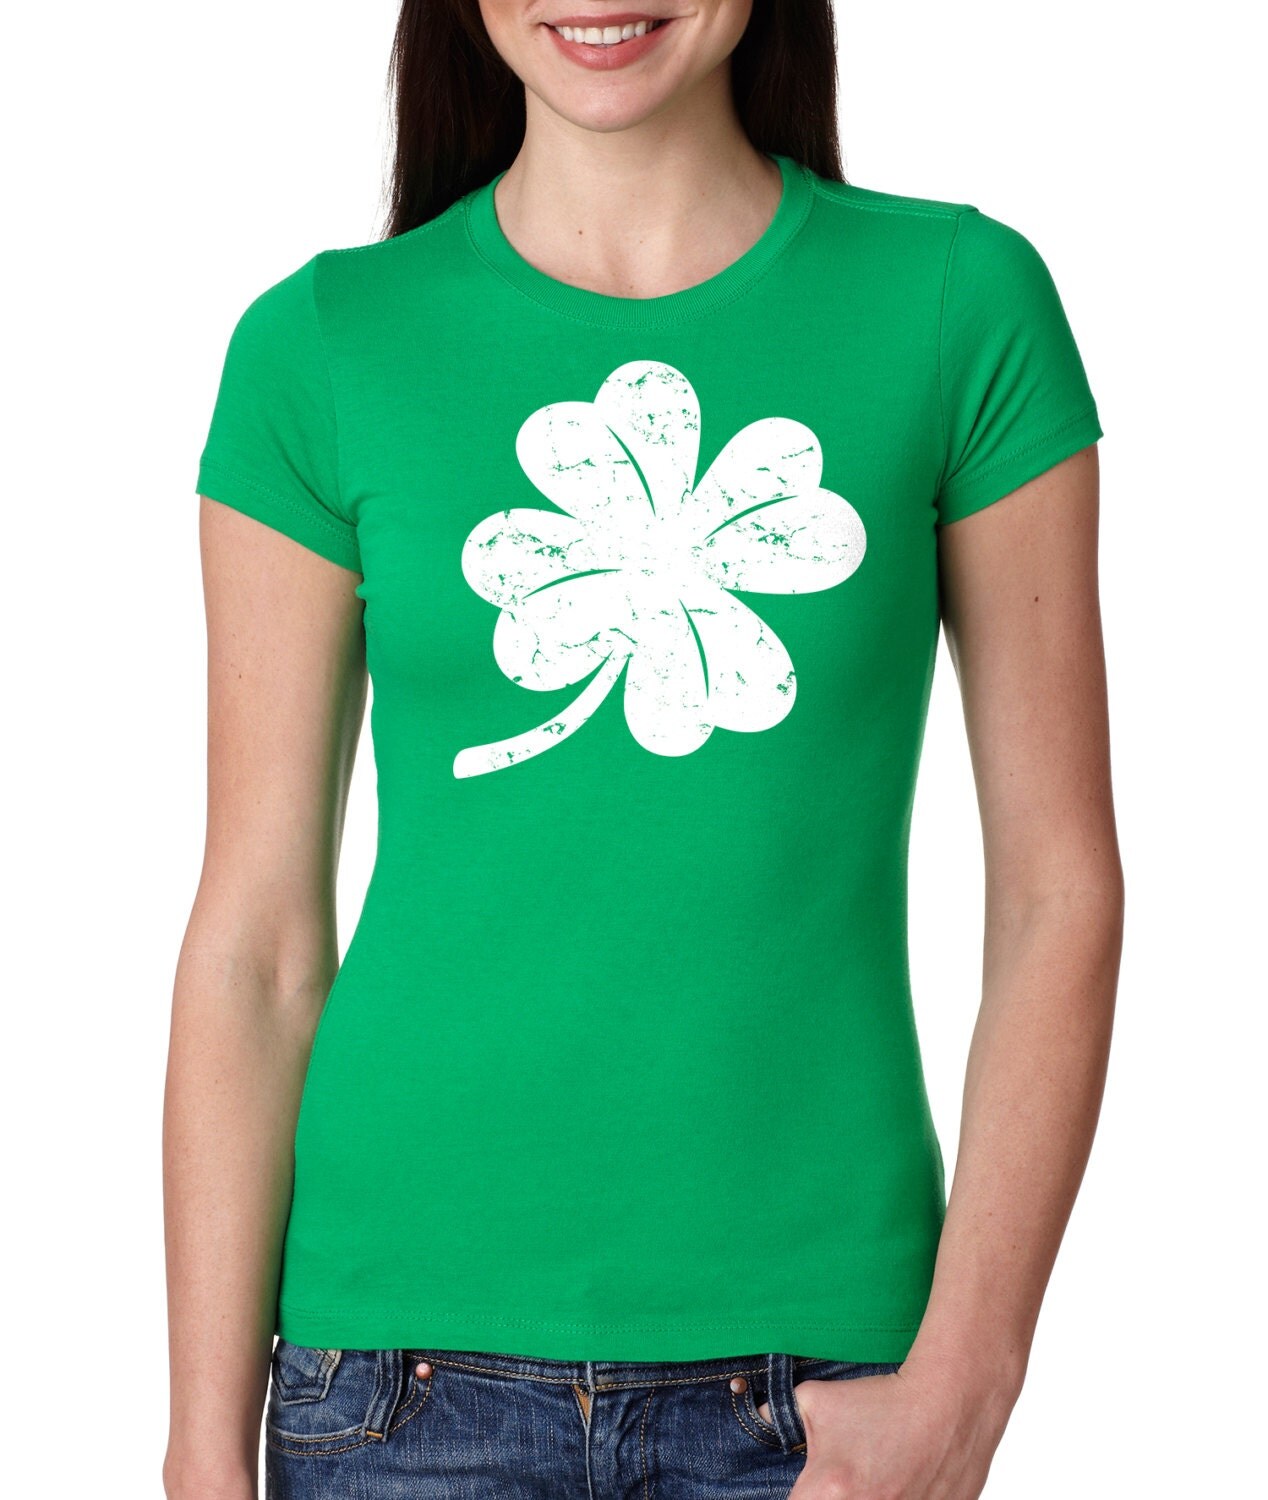 Clover Shamrock T-Shirt Woman Top Ladies Fit St. Patrick's